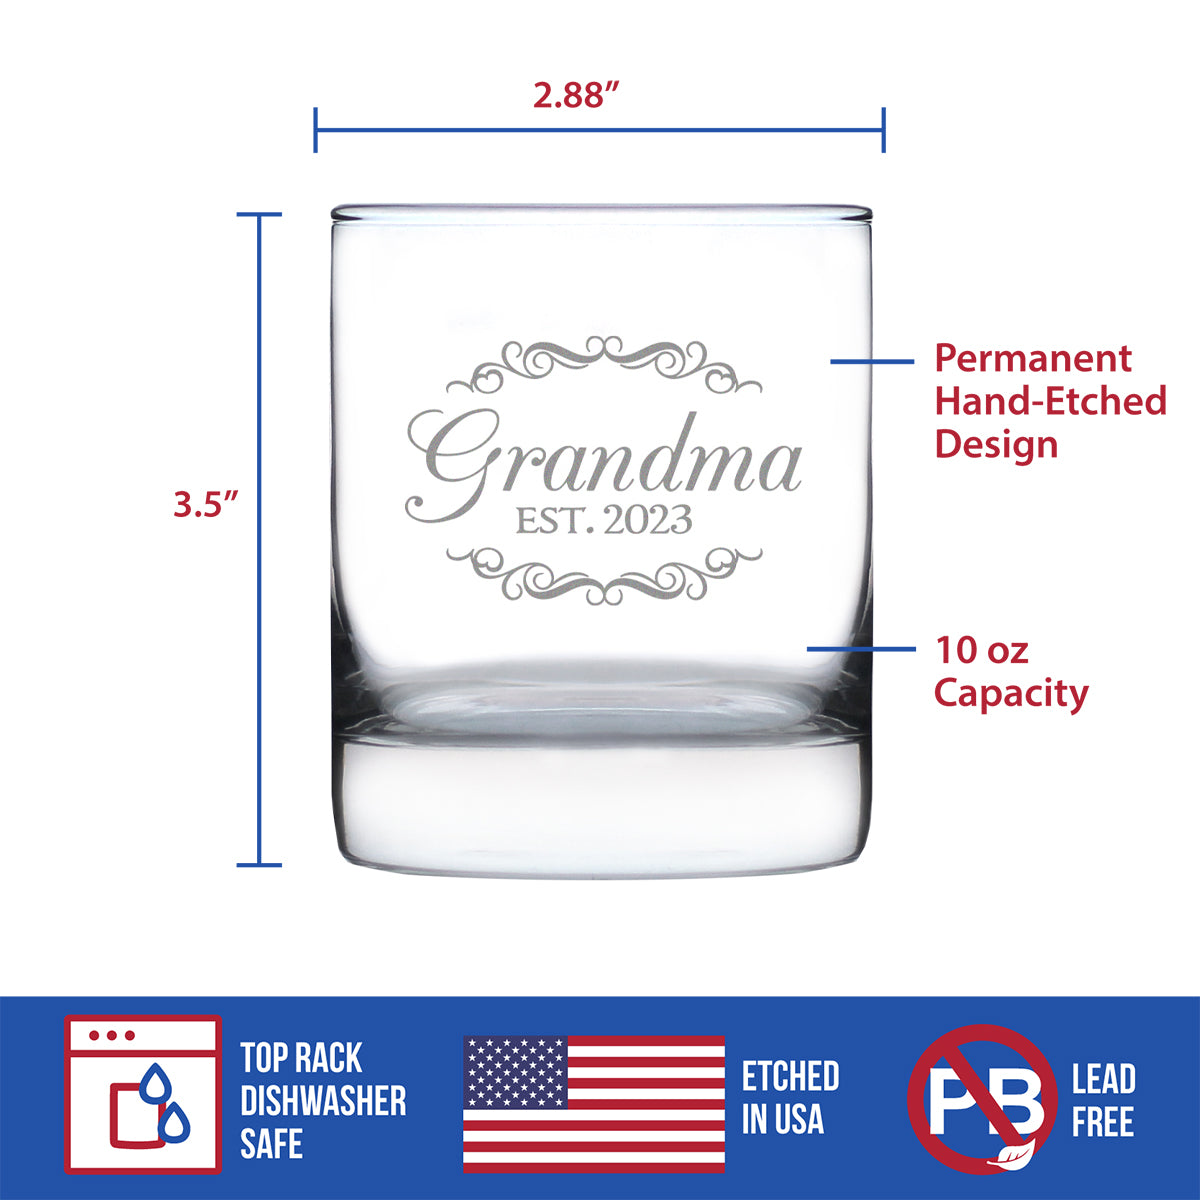 Grandma Est. 2023 - Decorative - 10 Ounce Rocks Glass